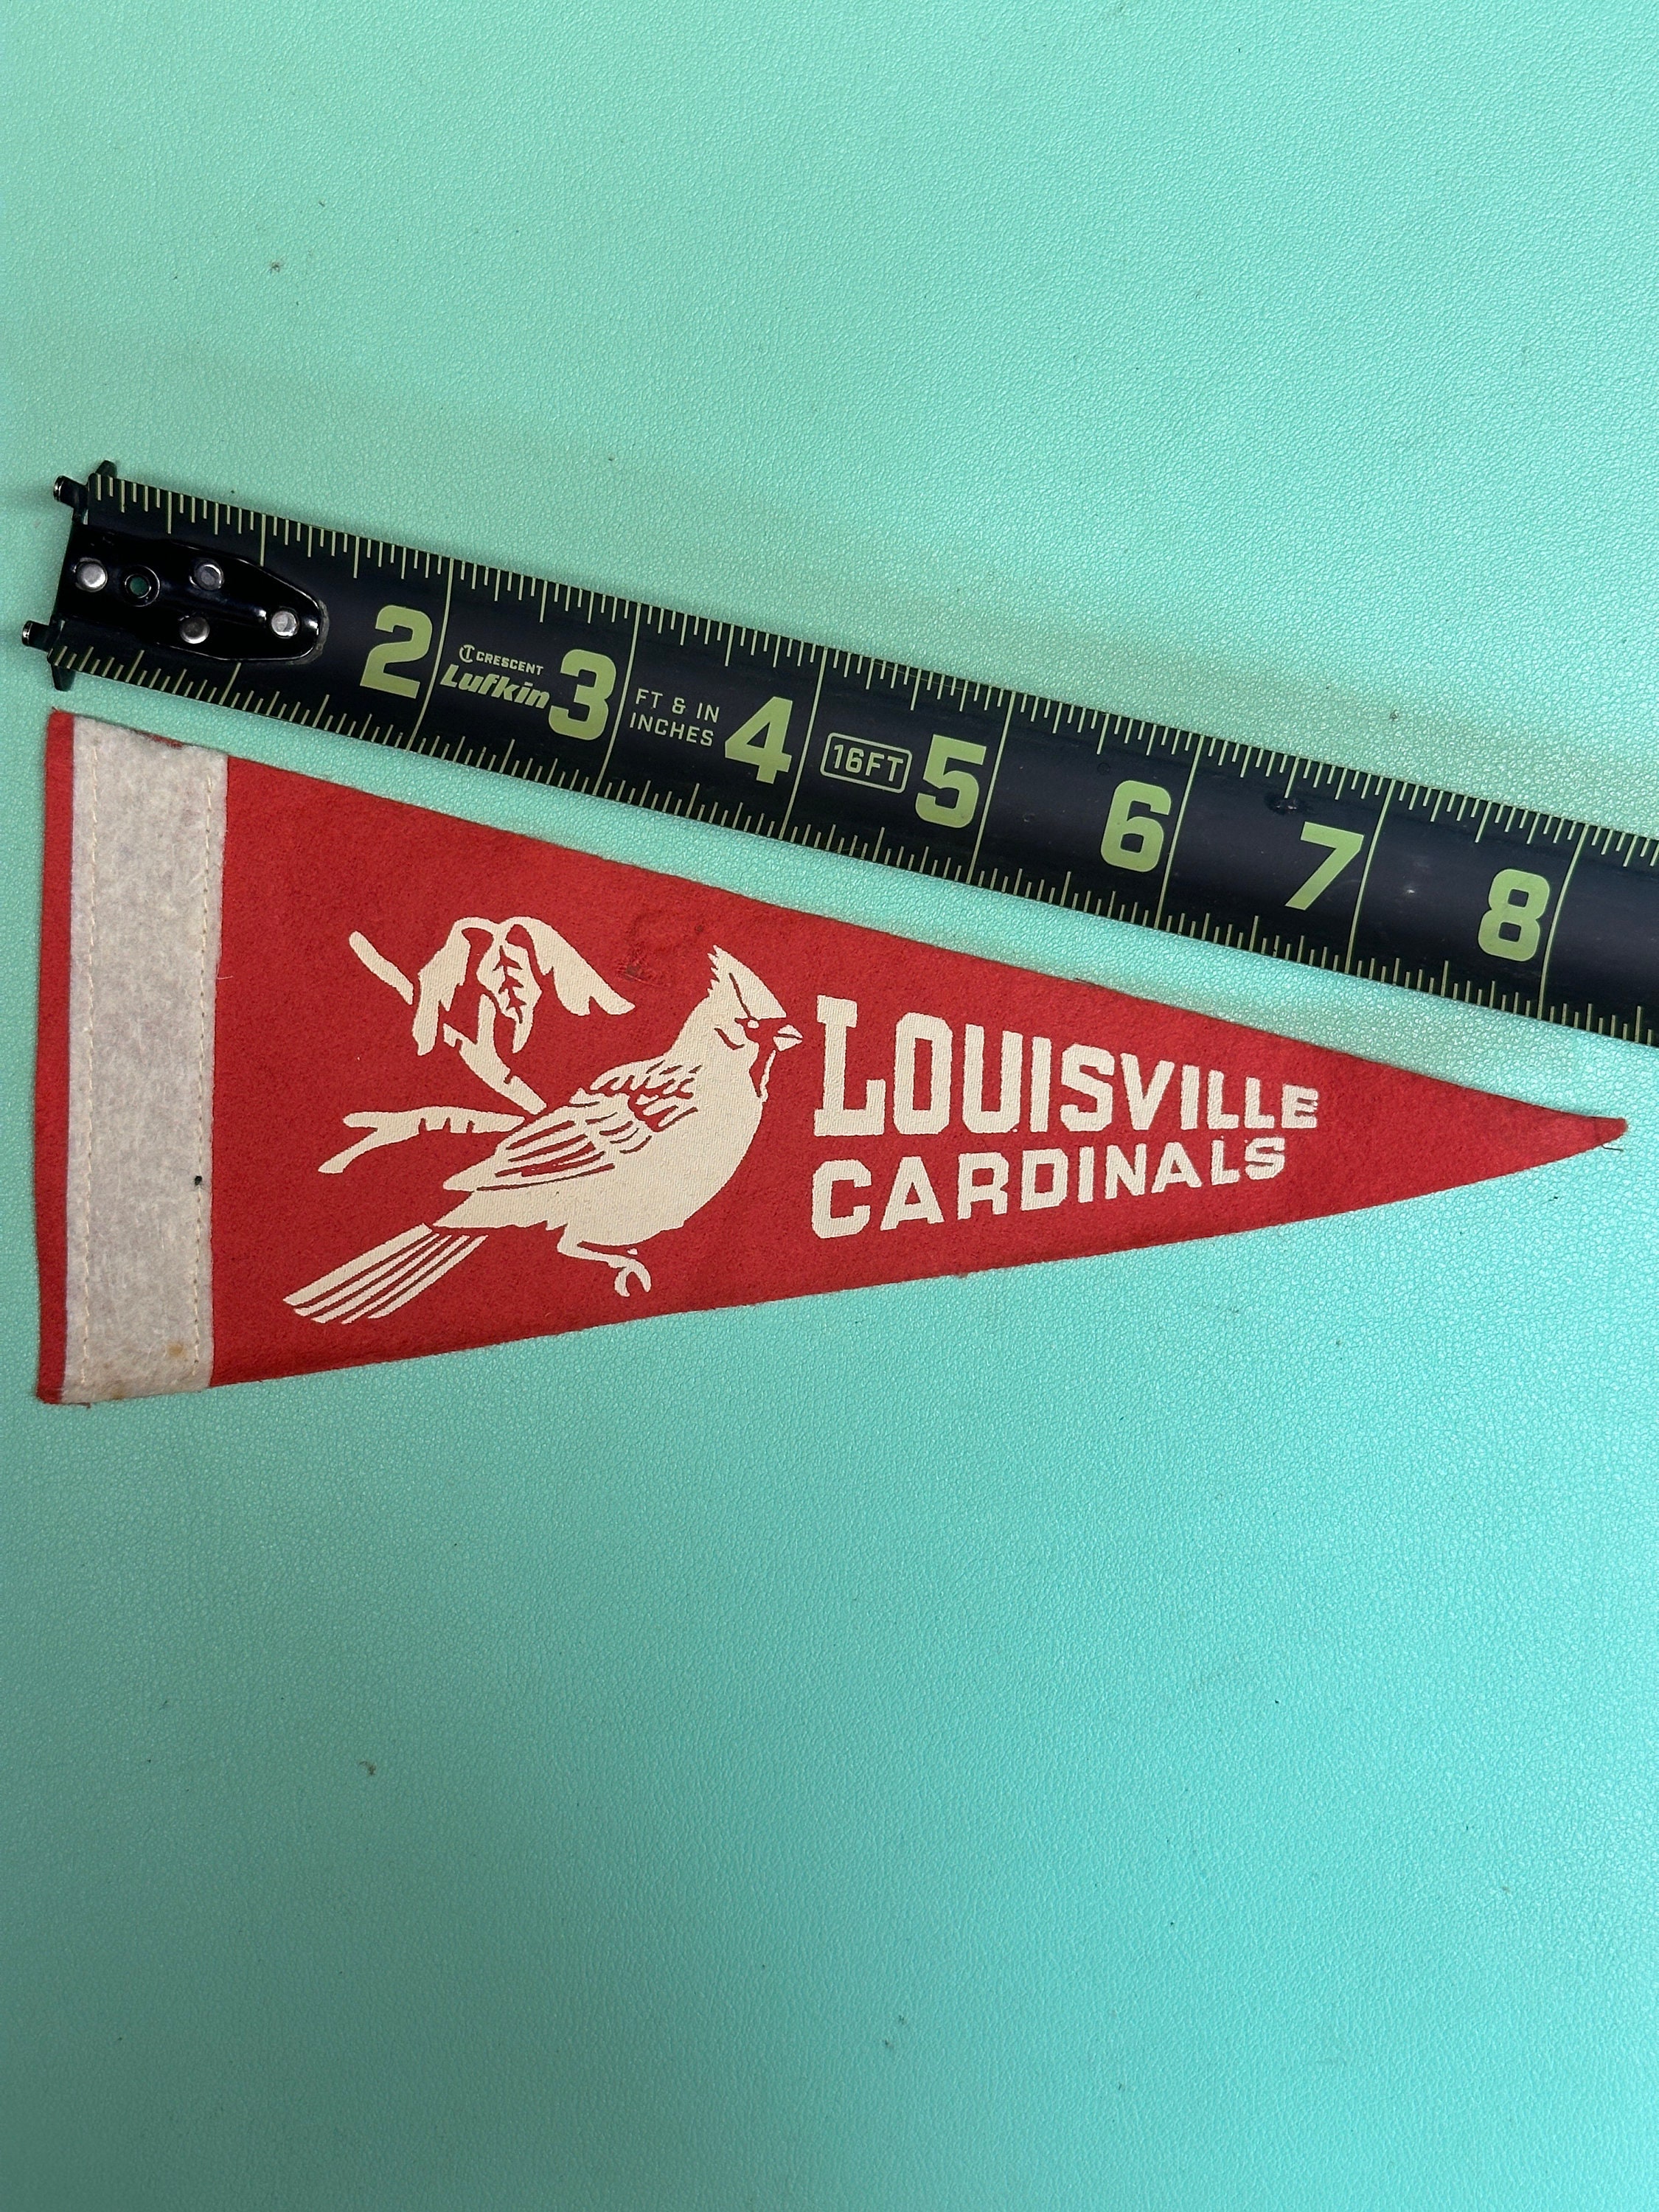  Retro Eagle USA Flag Kentucky - Vintage Louisville